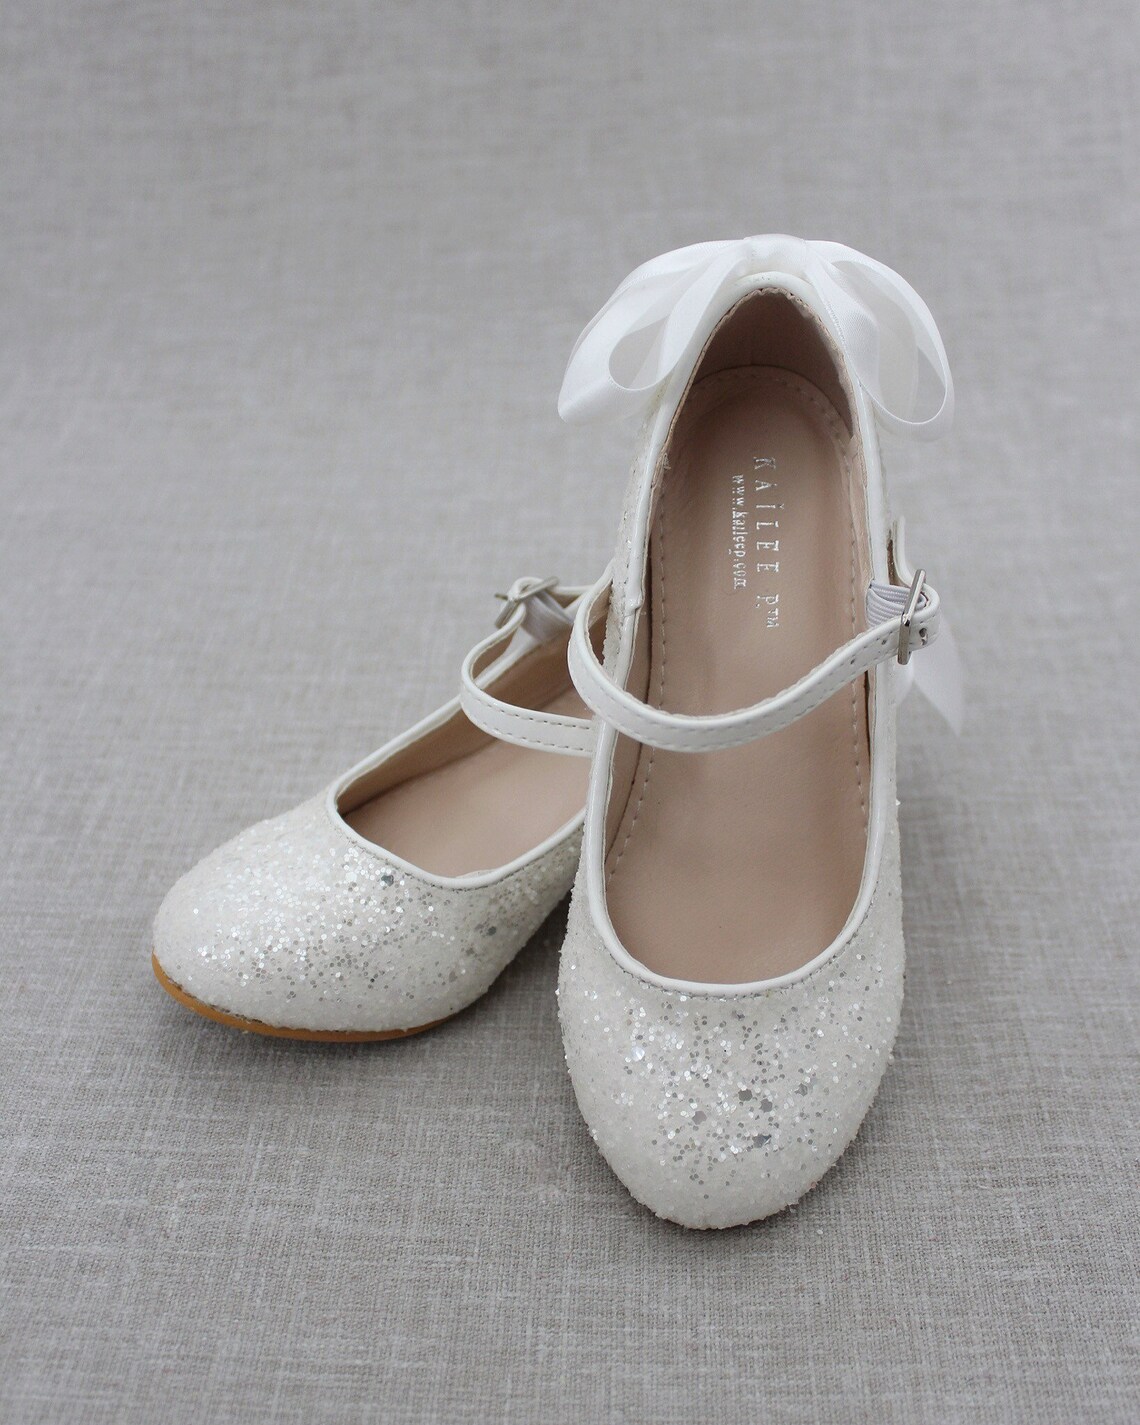 Girls Heel Glitter Shoes White Rock Glitter mary-jane heels | Etsy